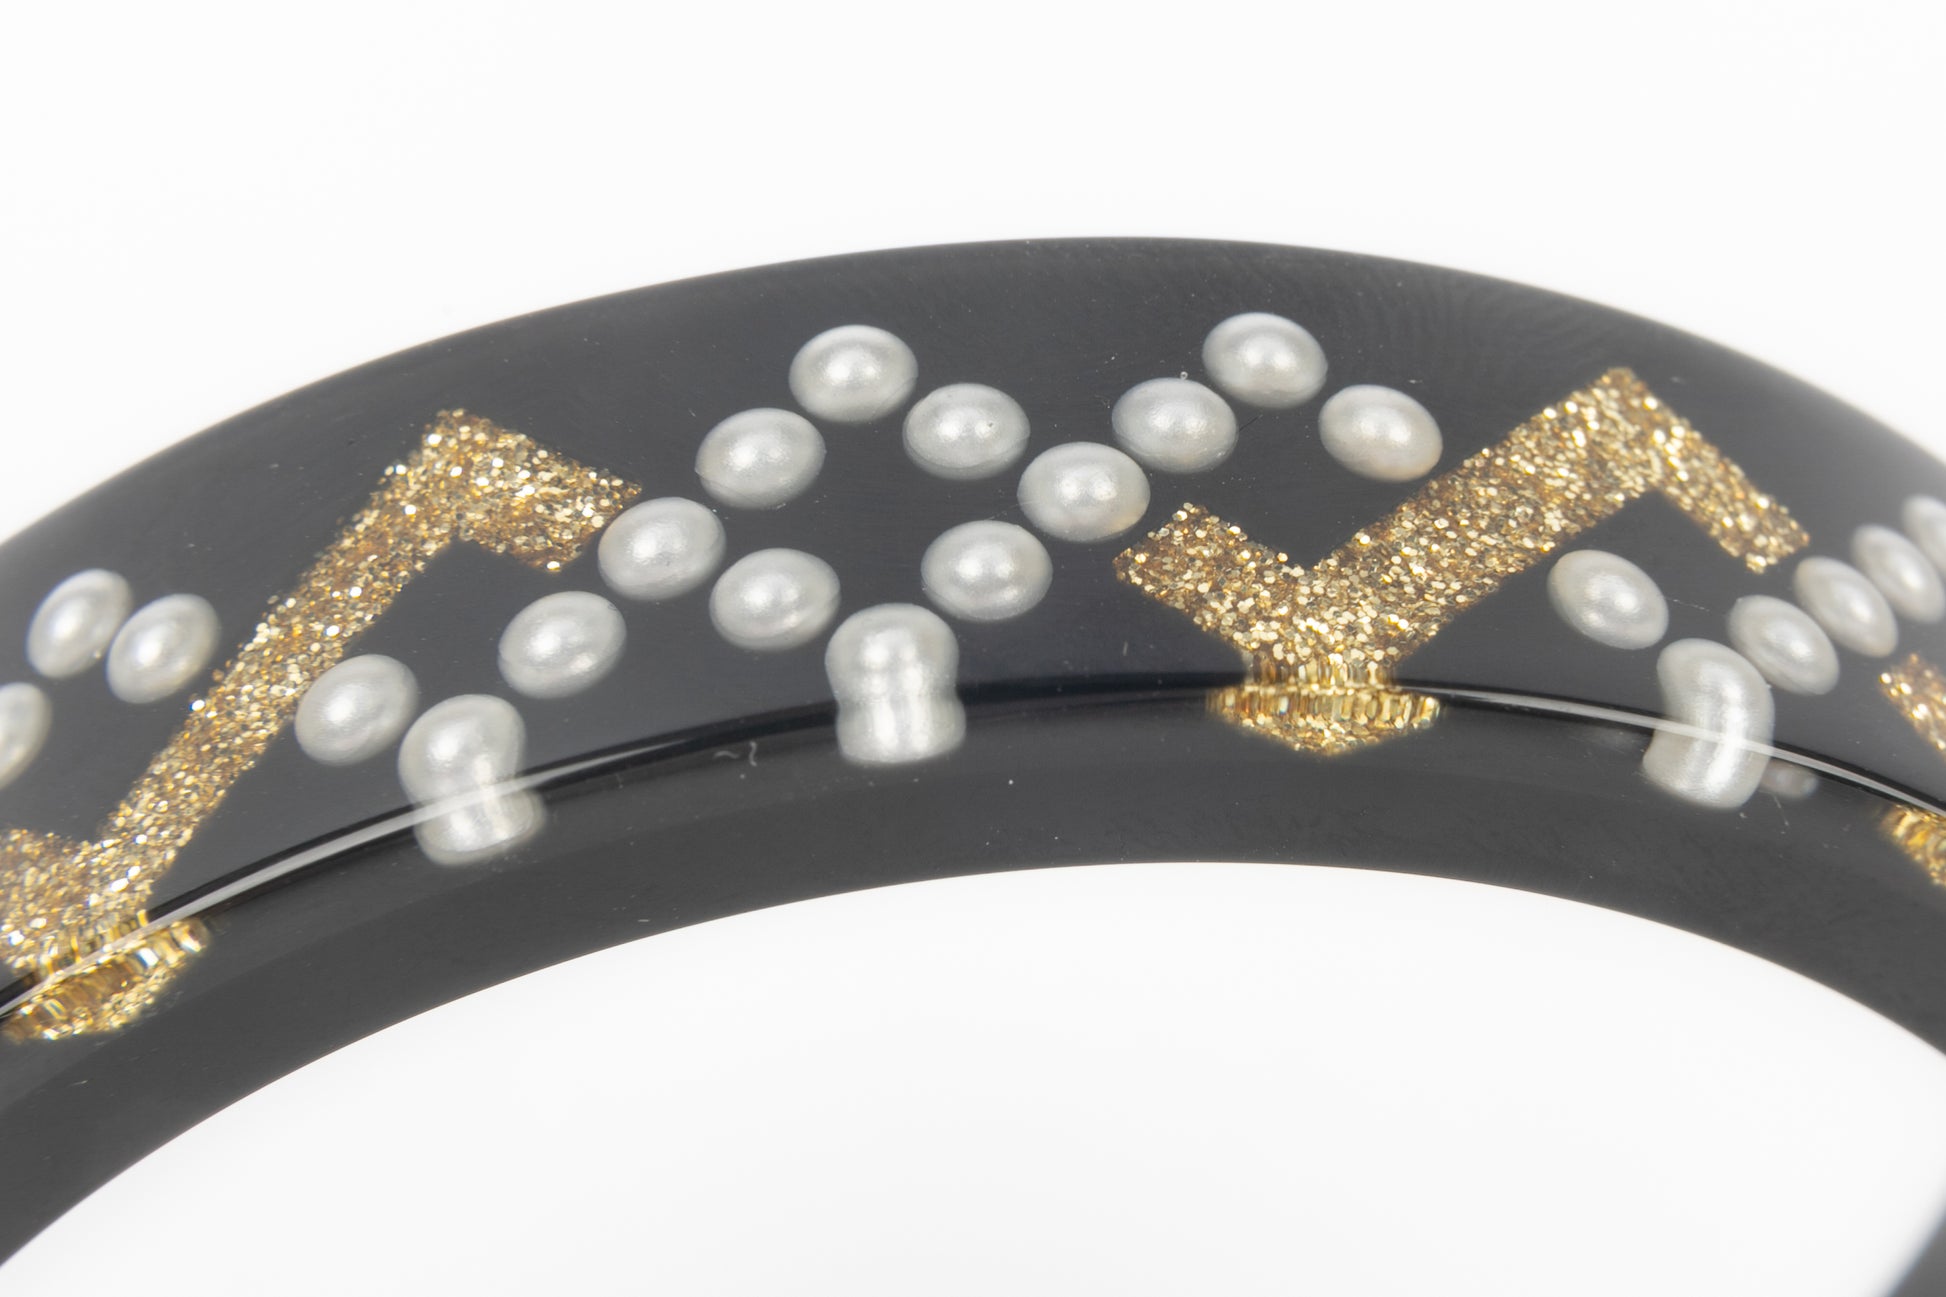 Bracelet Chanel 2018